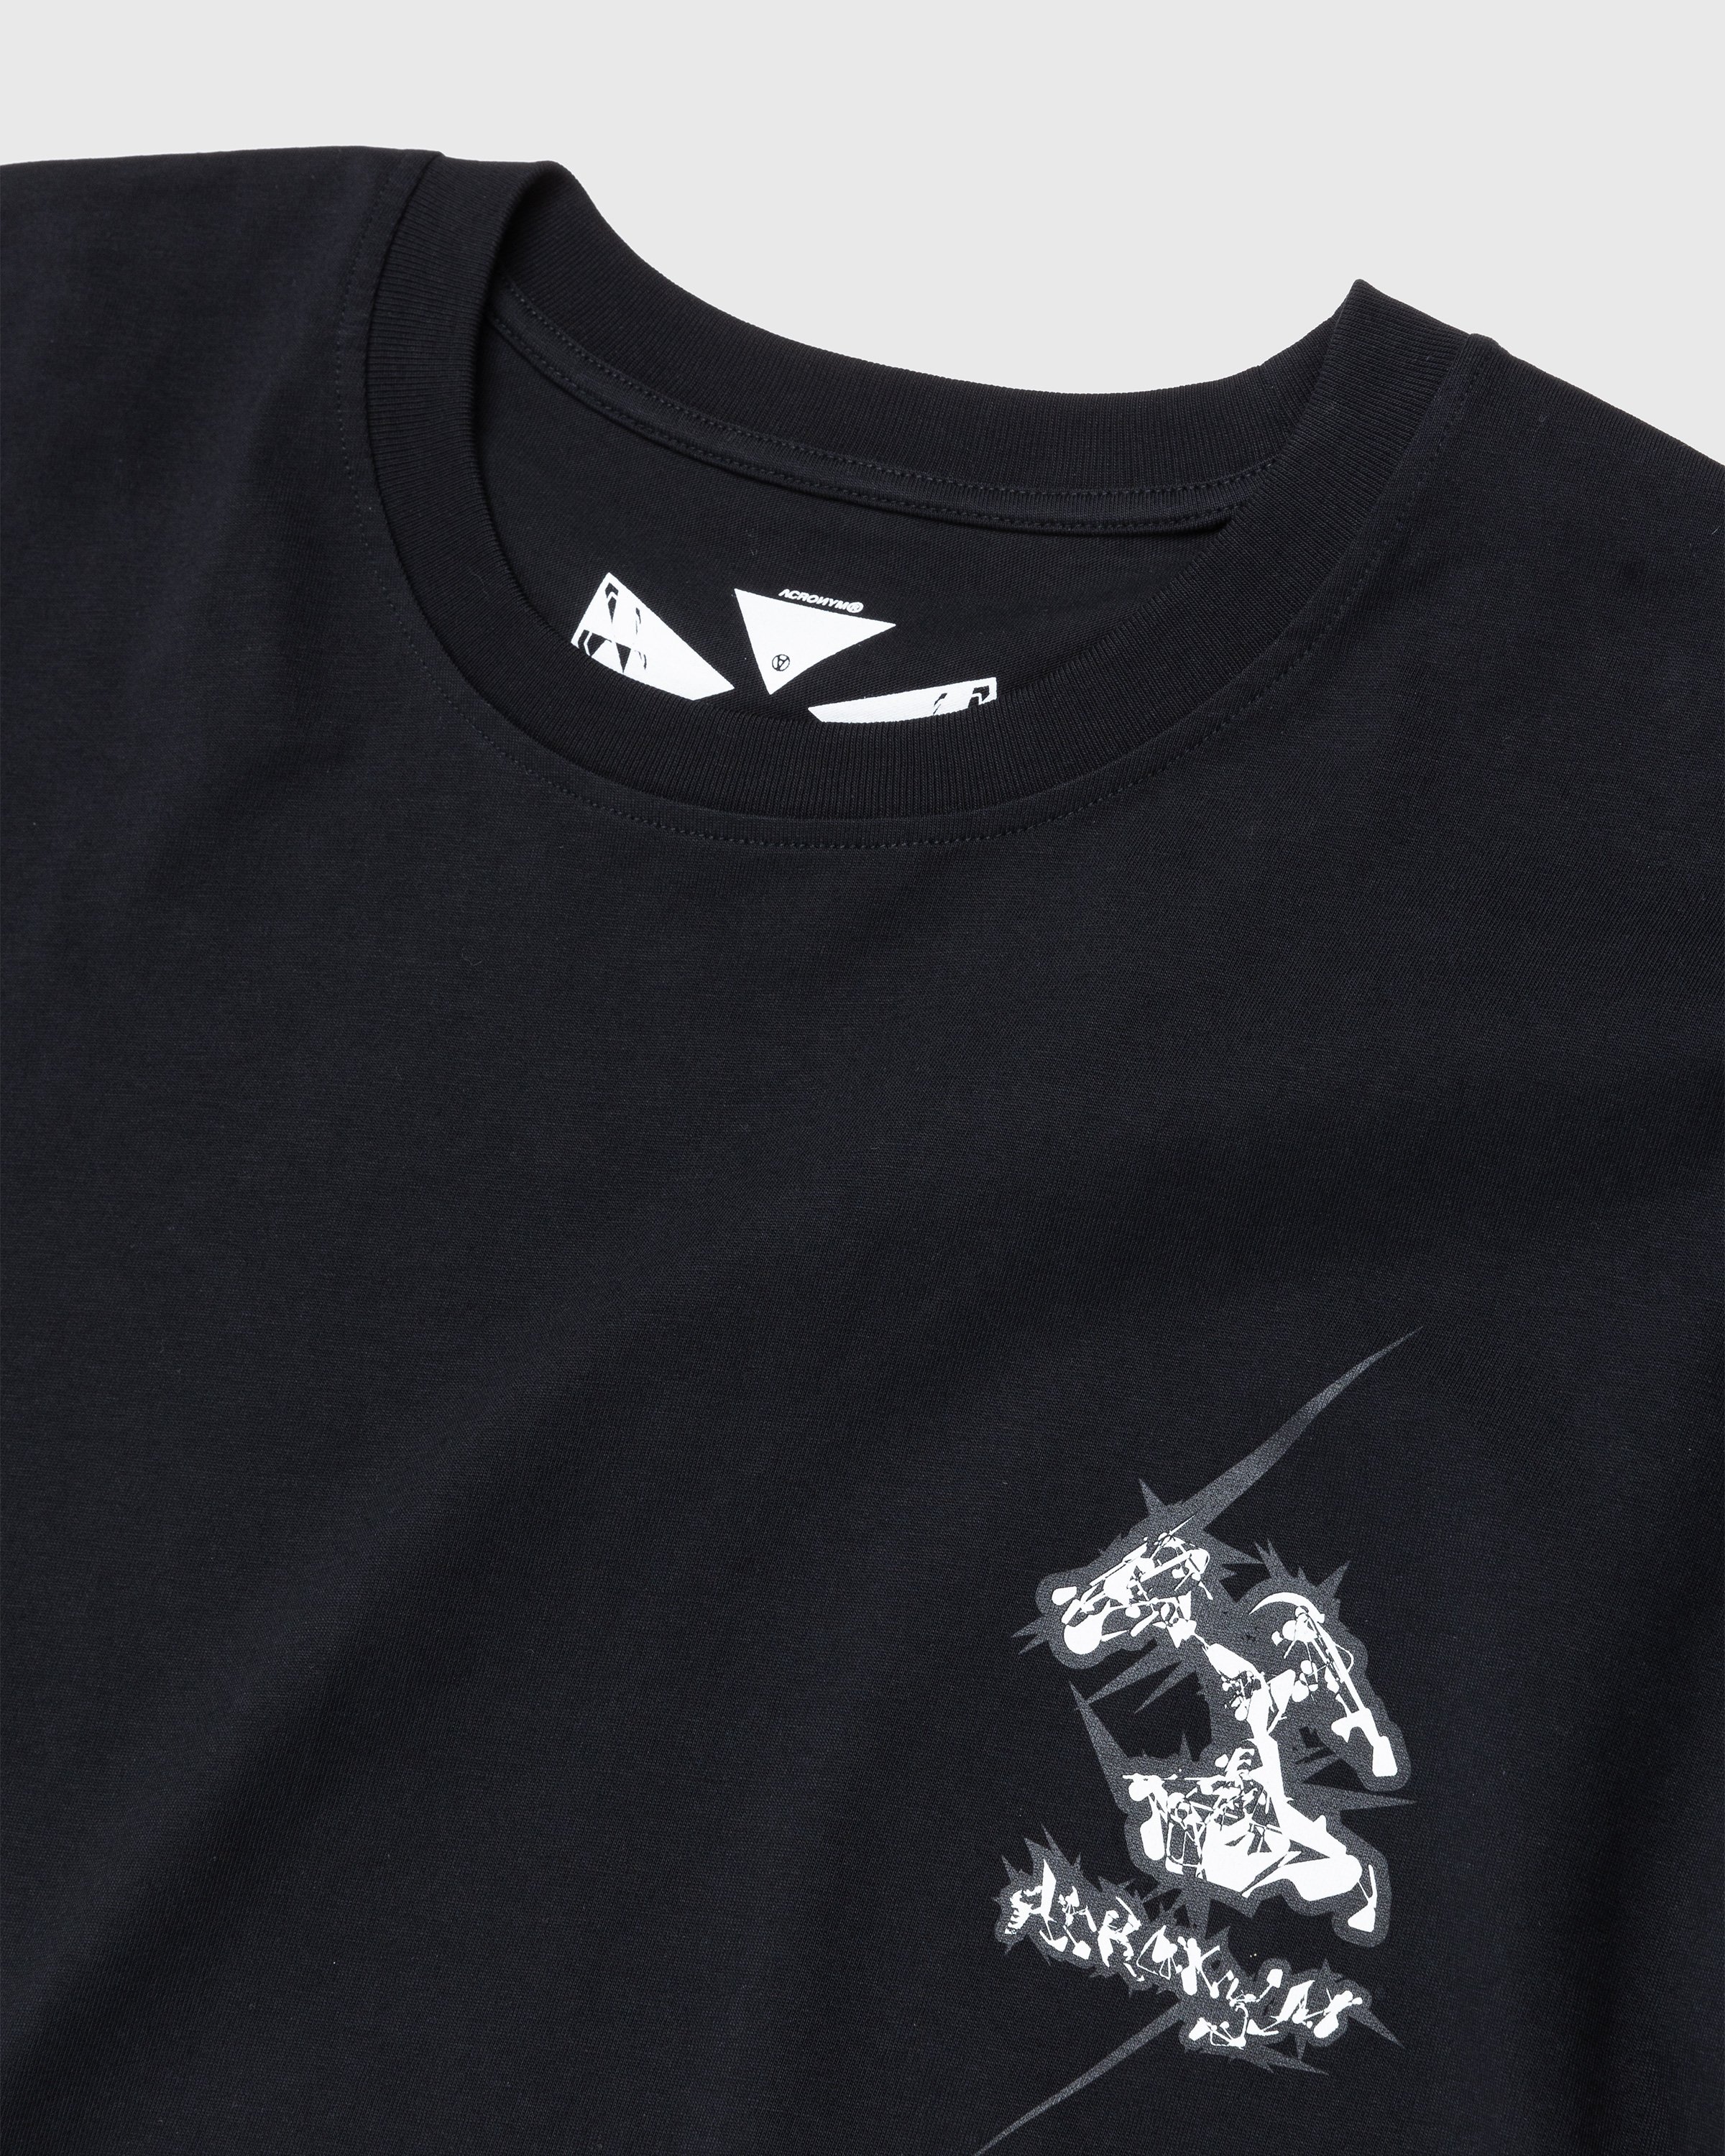 ACRONYM - S29-PR-A Organic Cotton Longsleeve T-Shirt Black - Clothing - Black - Image 3